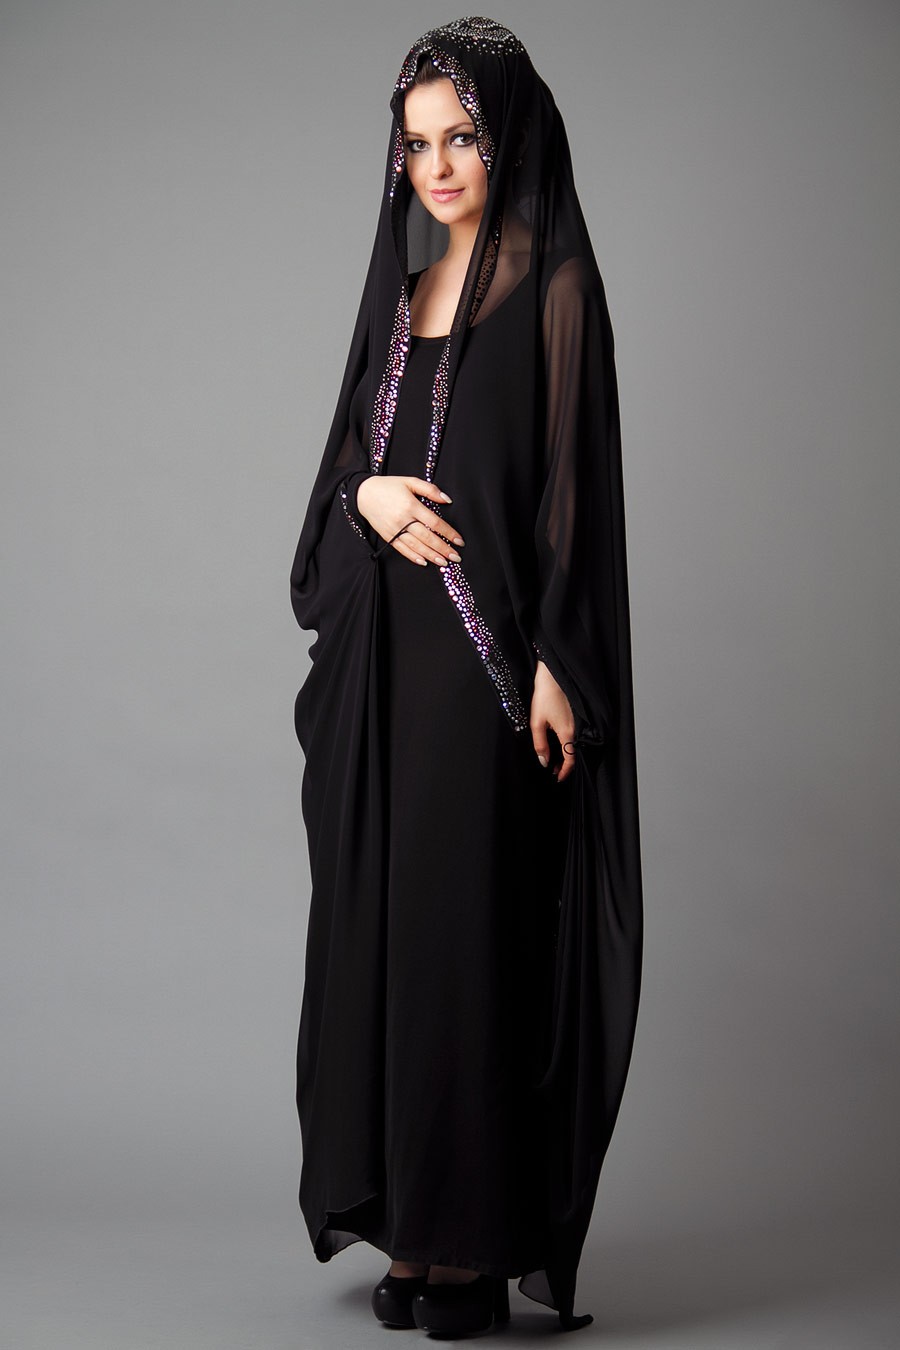 Abaya Designs 2014 Dress Collection Dubai Styles Fashion Pics Photos